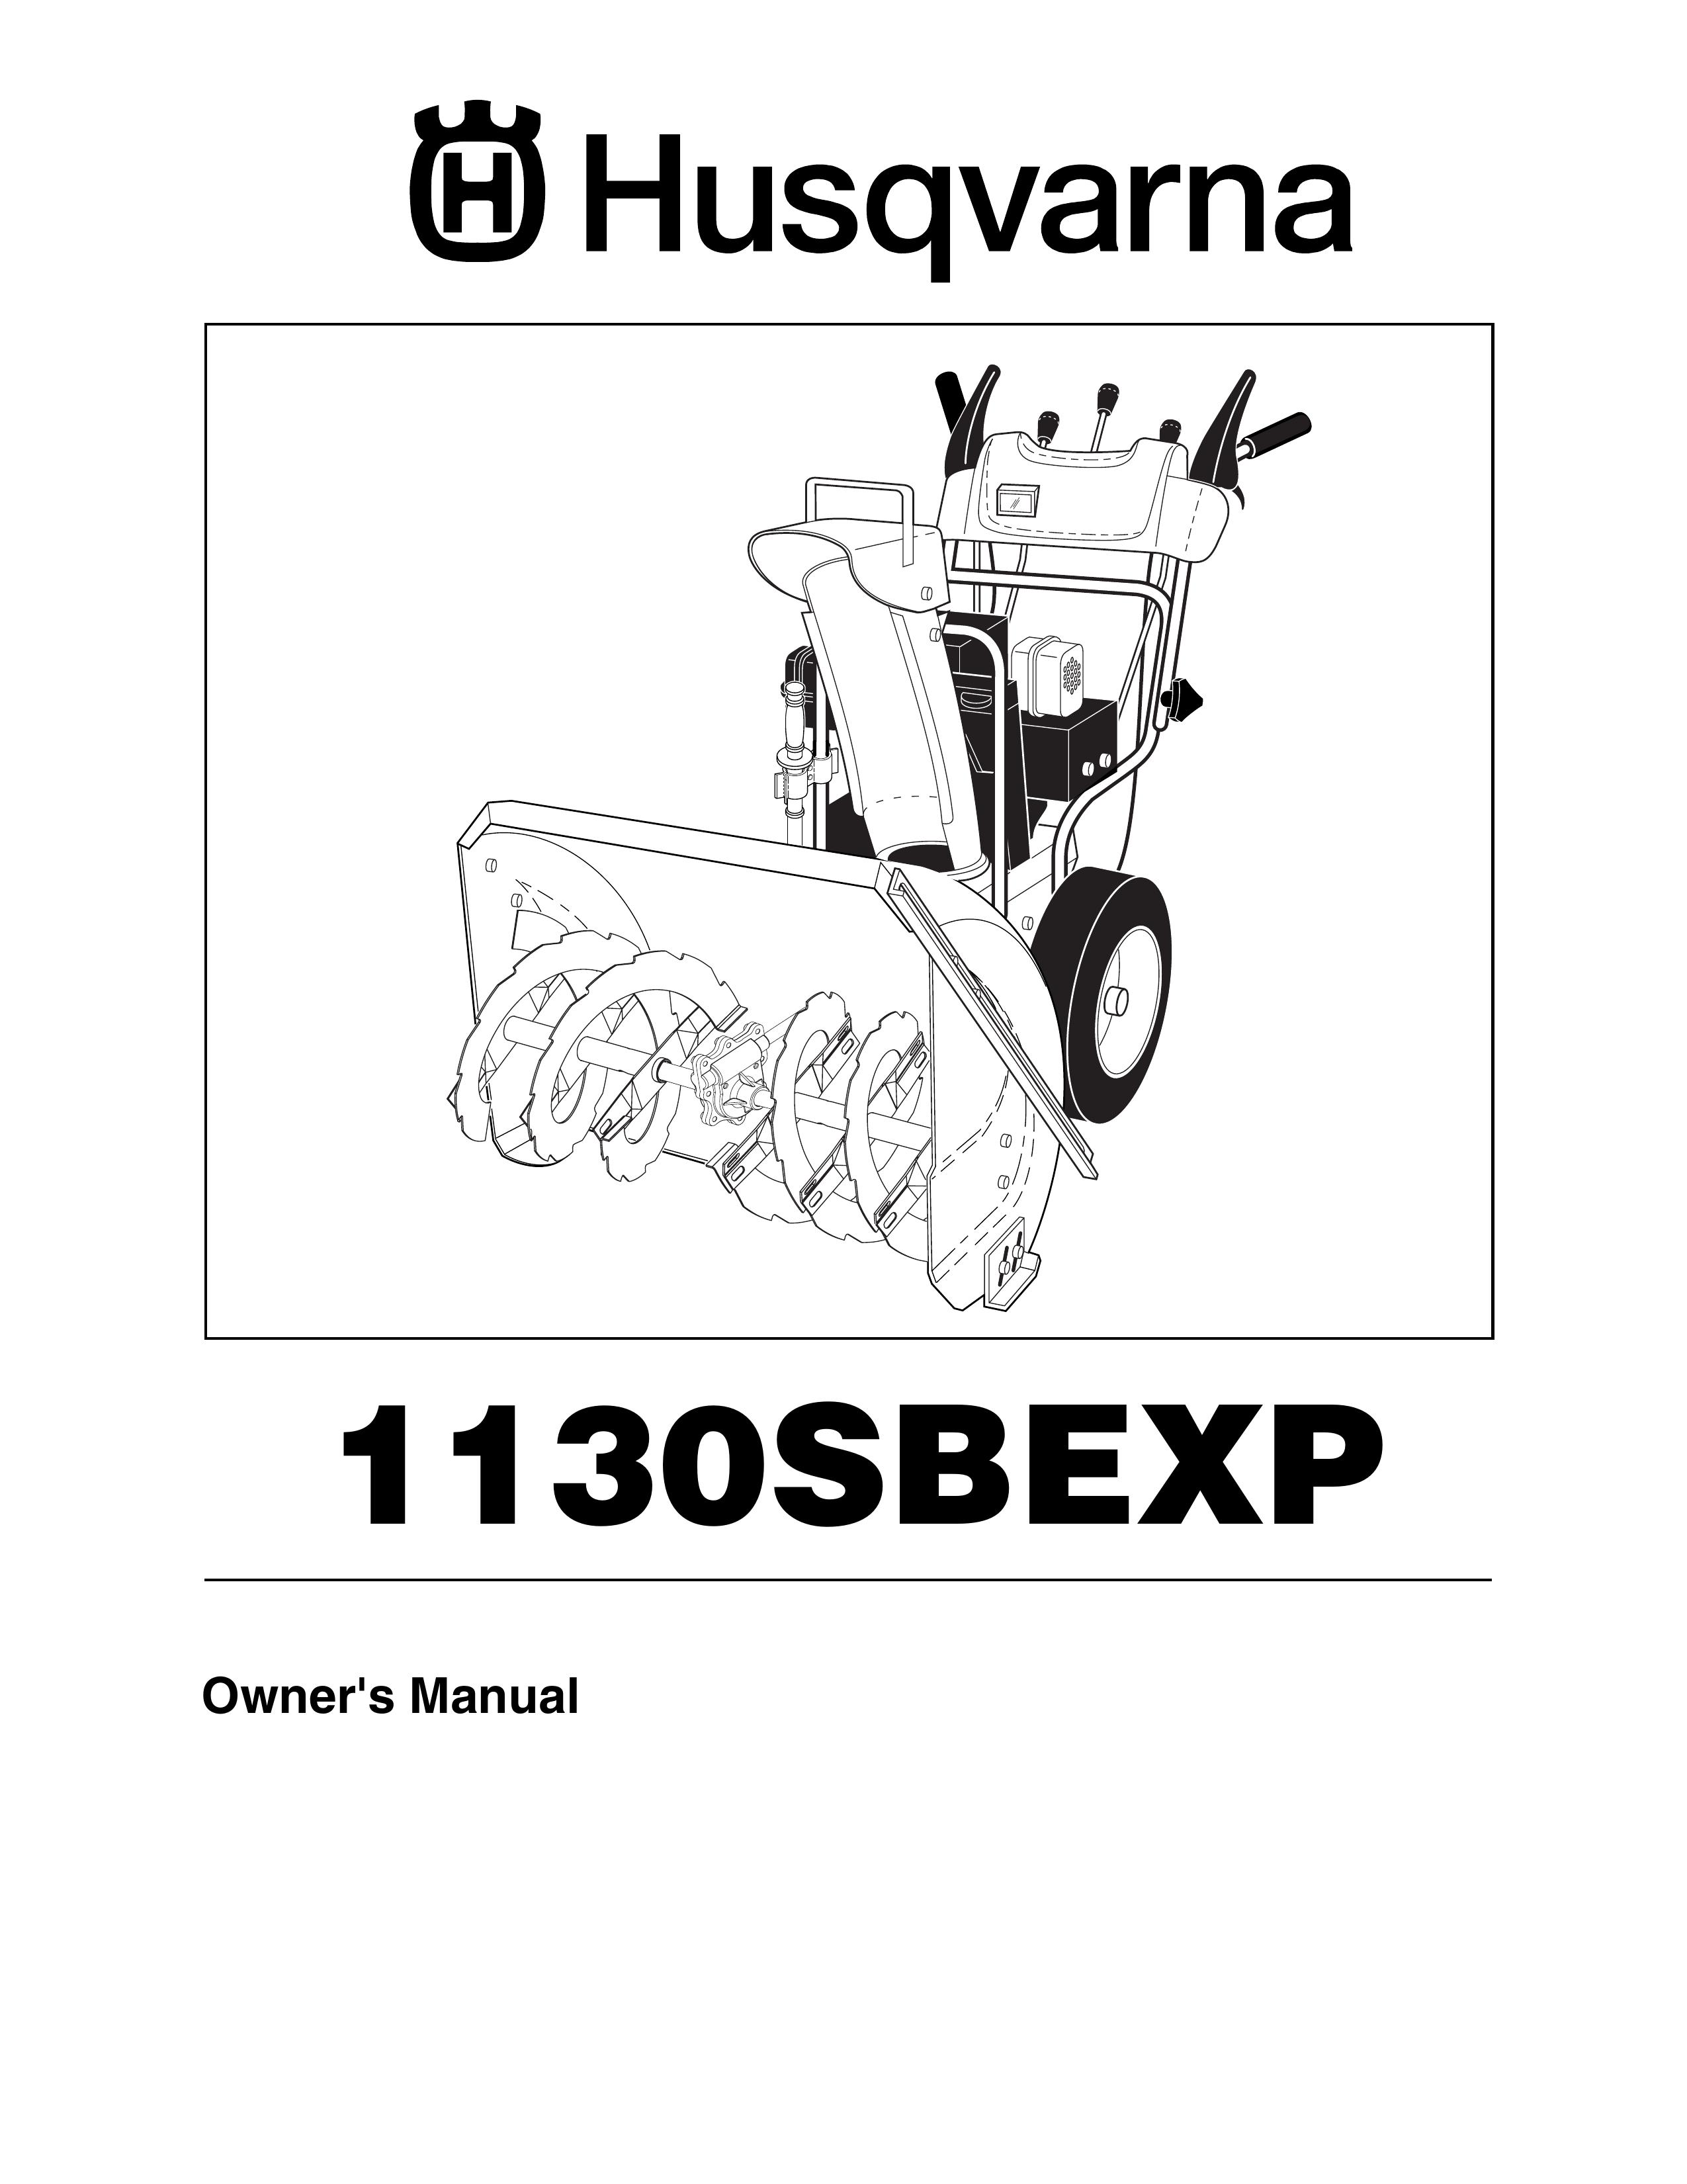 Husqvarna 1130SBEXP Snow Blower User Manual